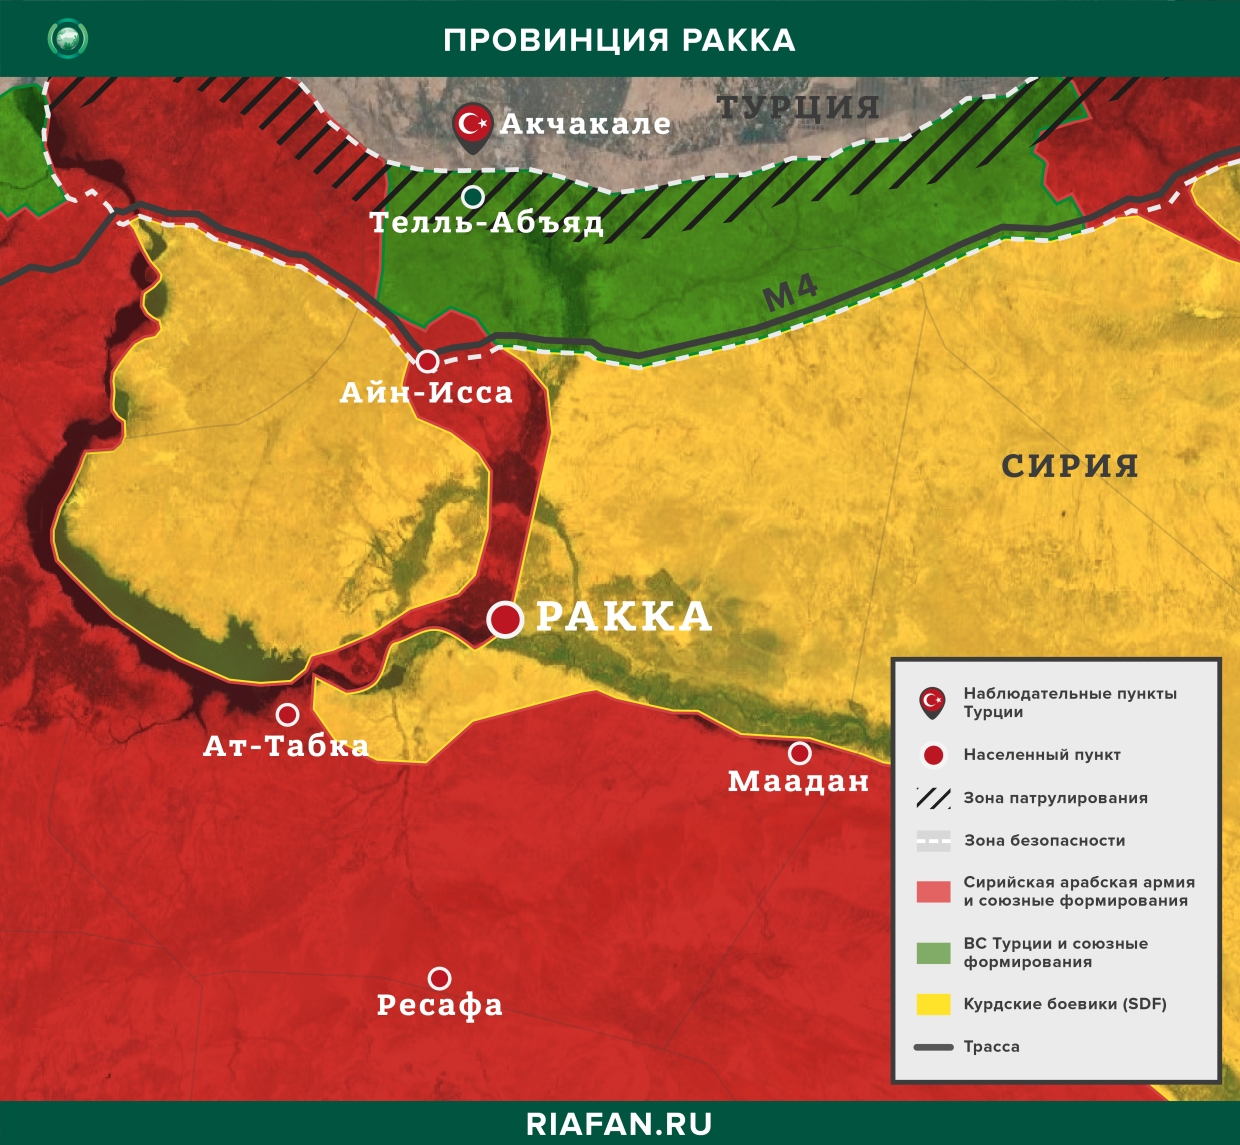 Noticias de Siria 10 Septiembre 22.30: боевики SDF насмерть запытали жителя Дейр-эз-Зора